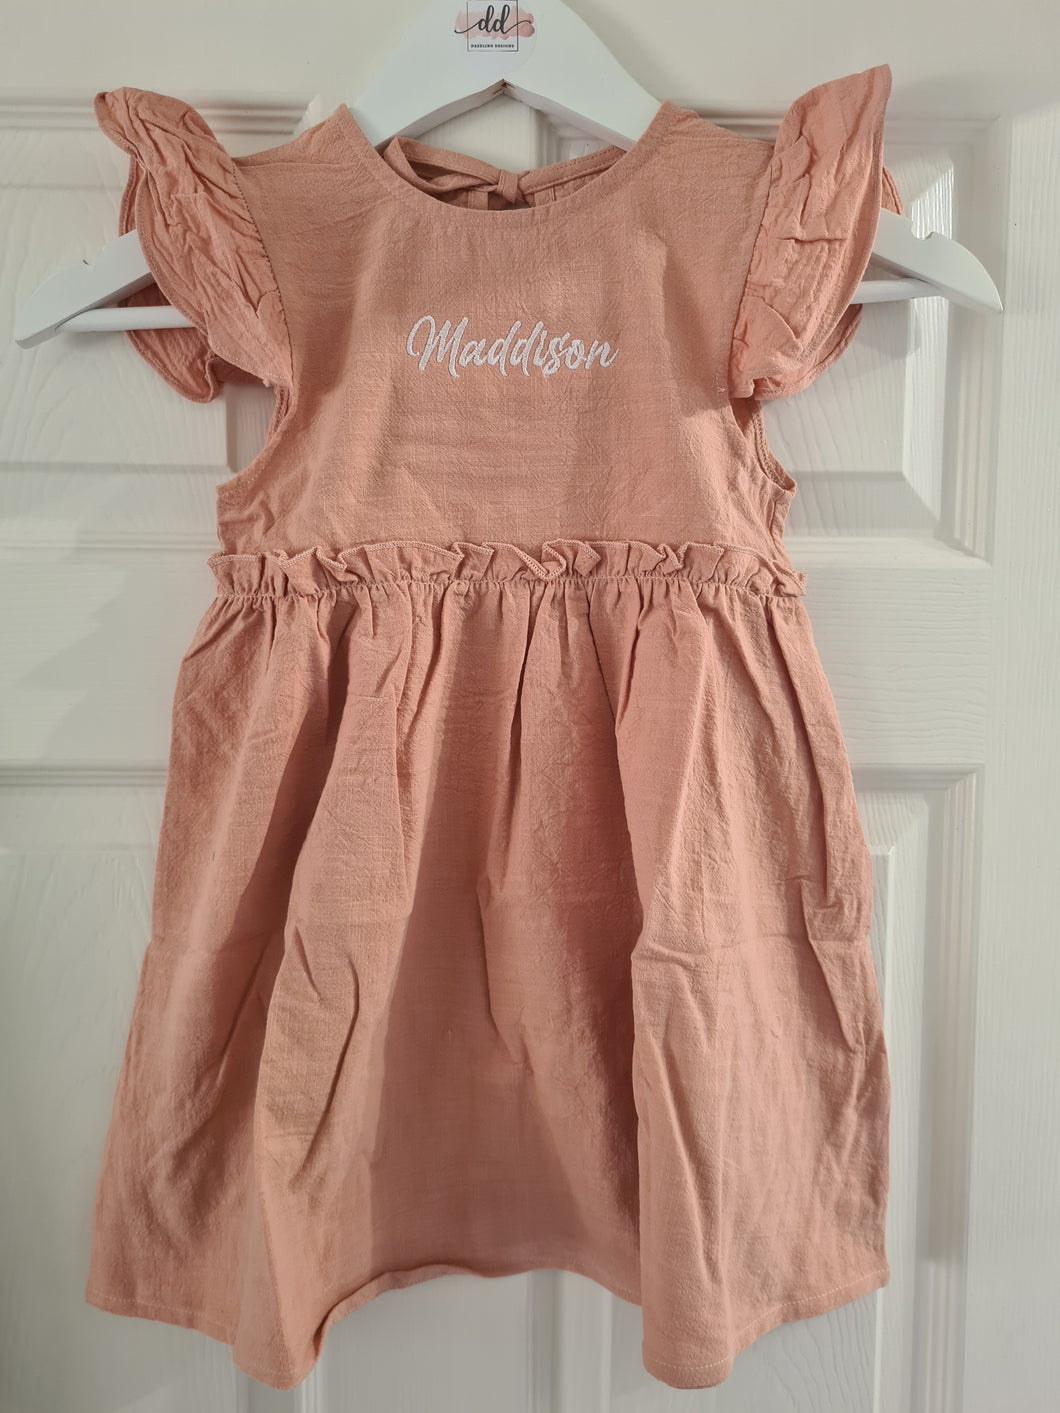 Embroidered summer dress